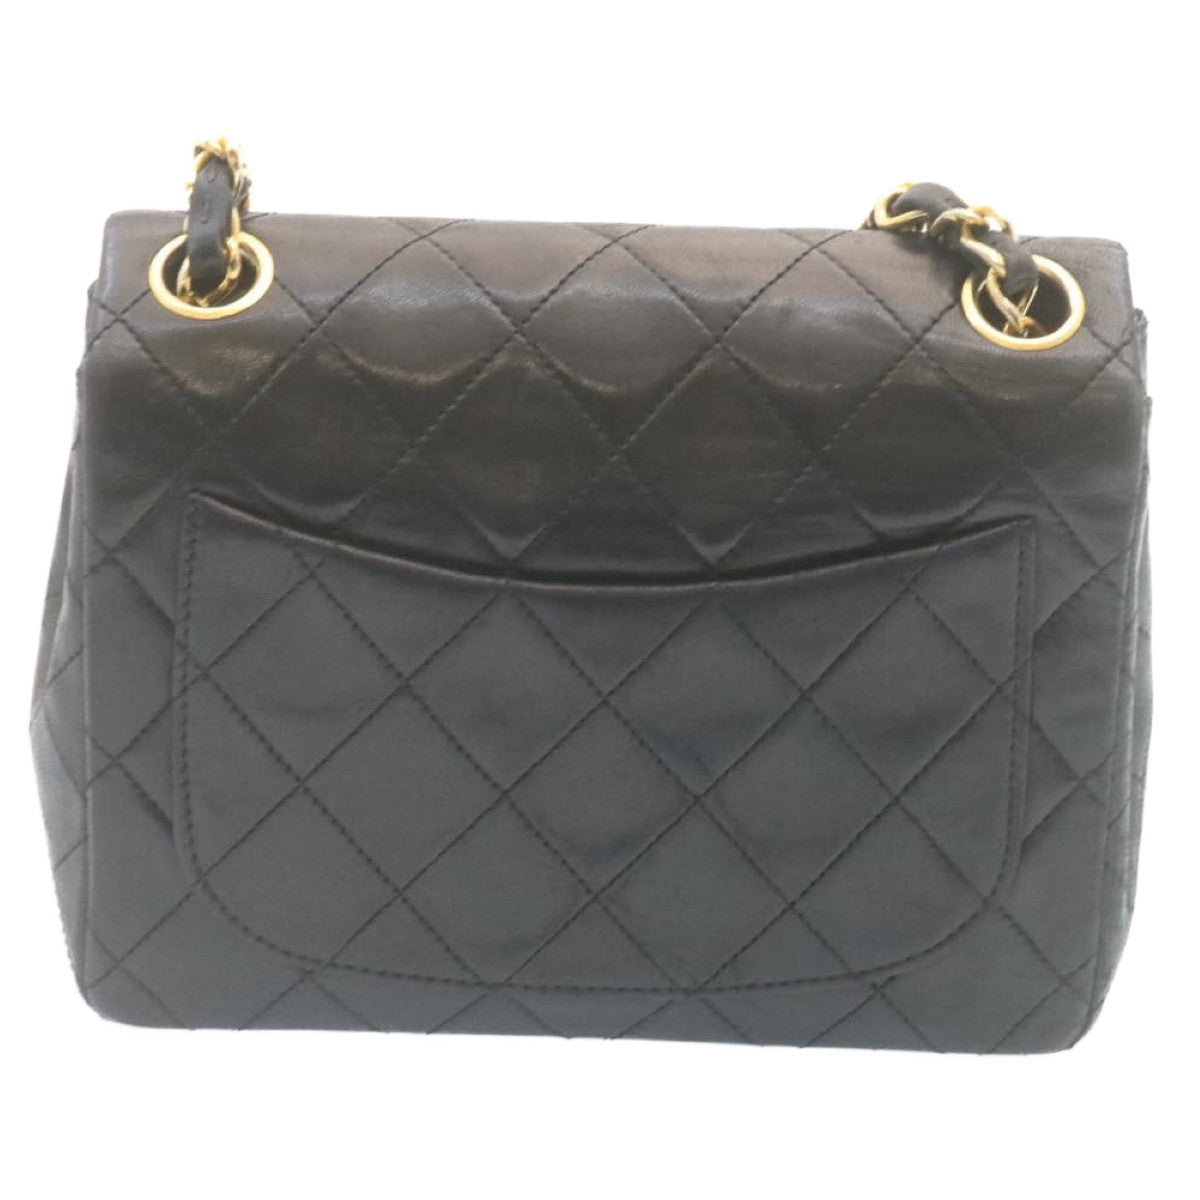 Chanel Vintage Lambskin Leather 2.55 Trapezoid Cc Medium Flap Bag in Black